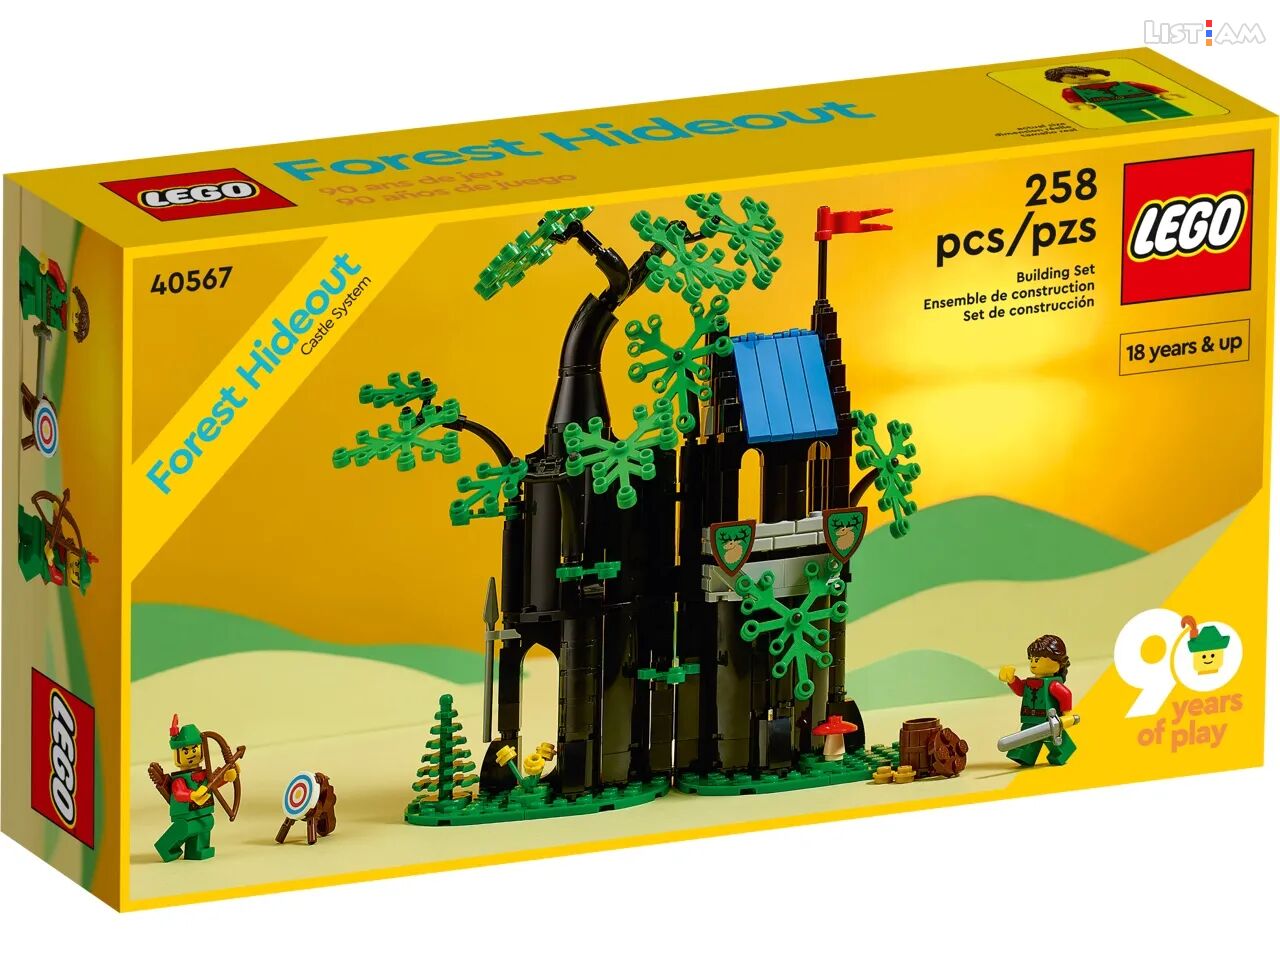 Original Lego castle